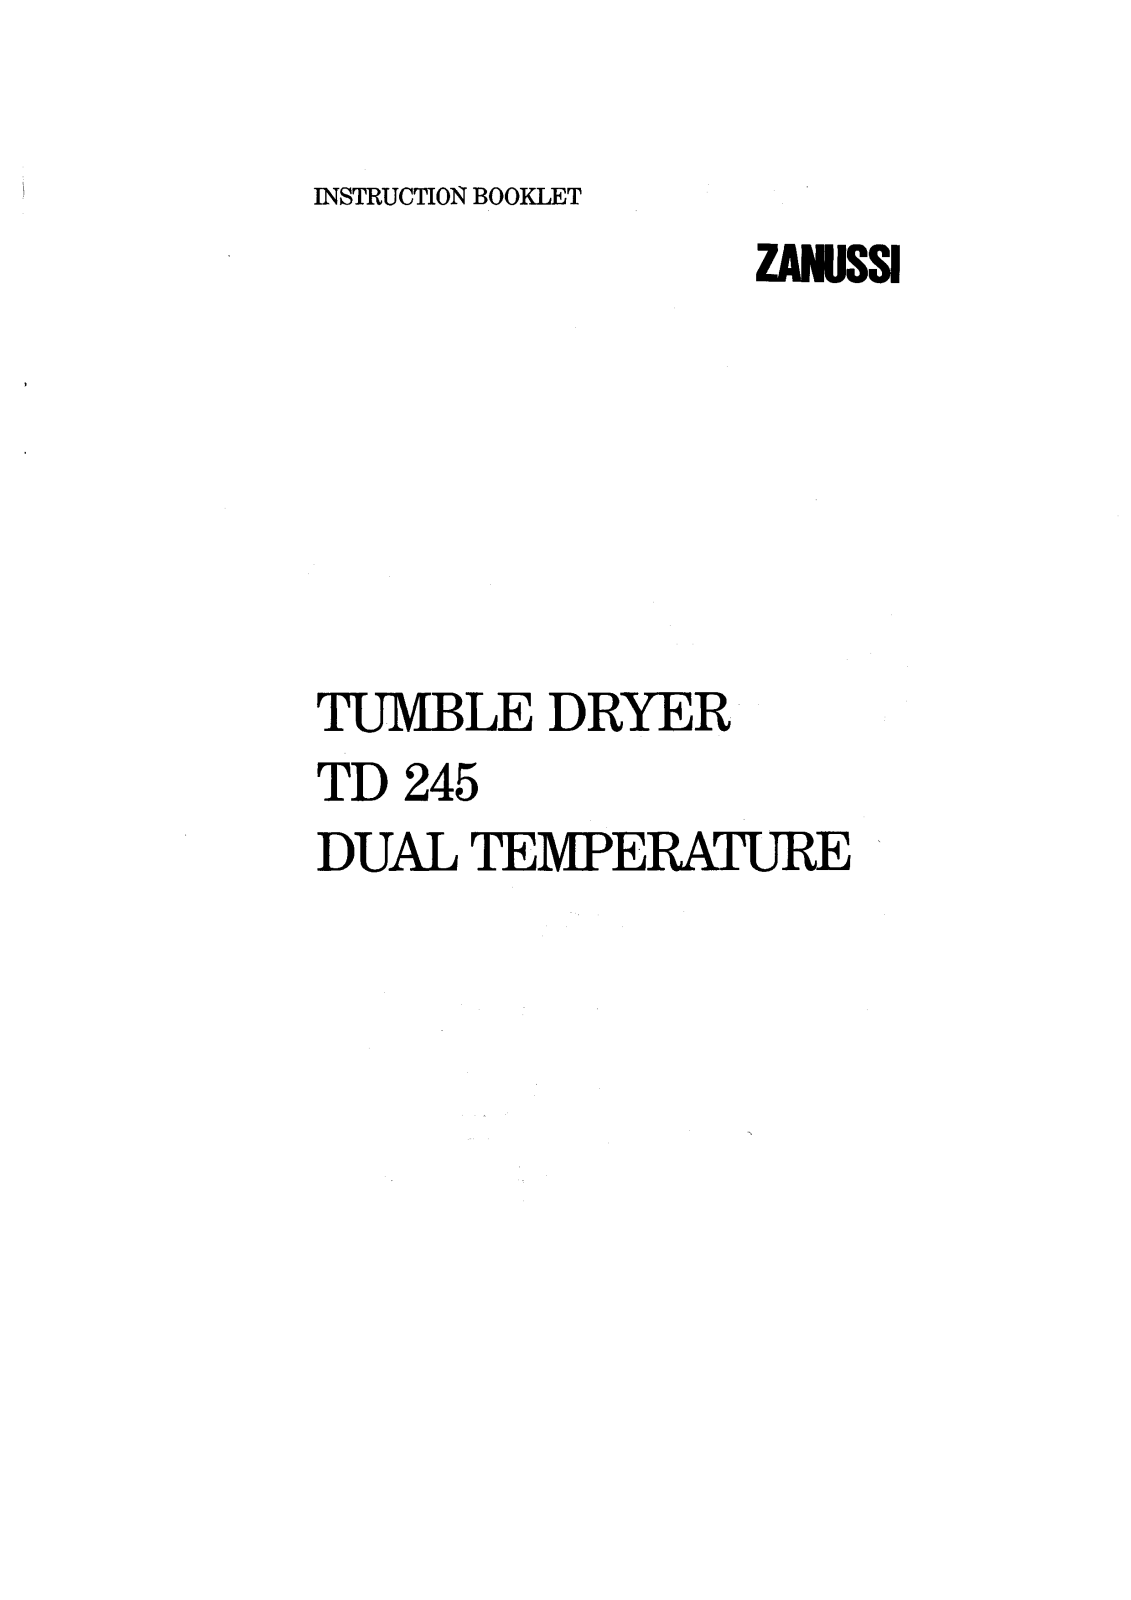 Zanussi TD245/A User Manual